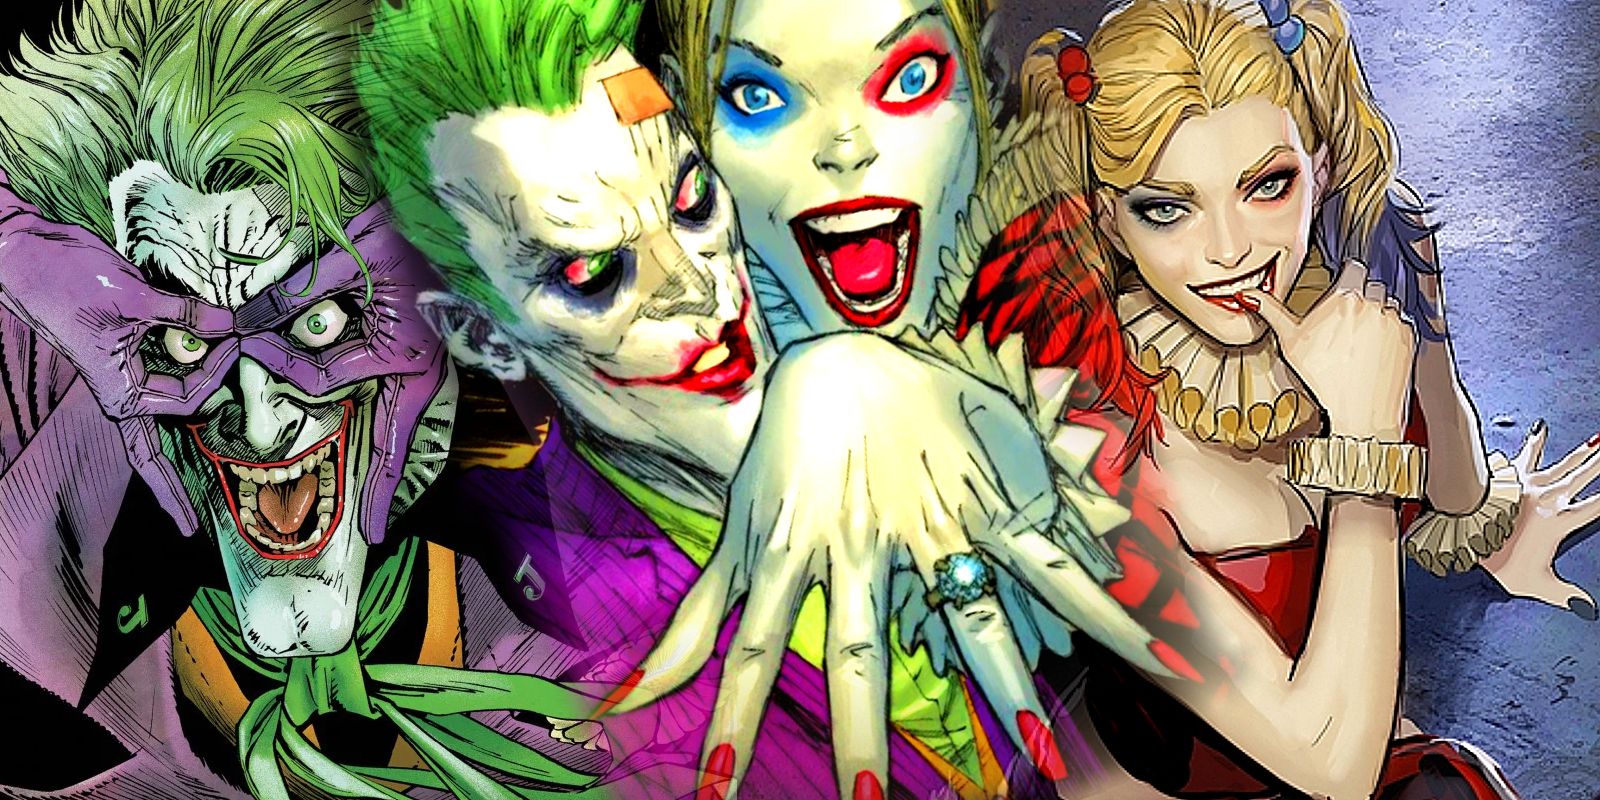 Harley and Joker engagement banner